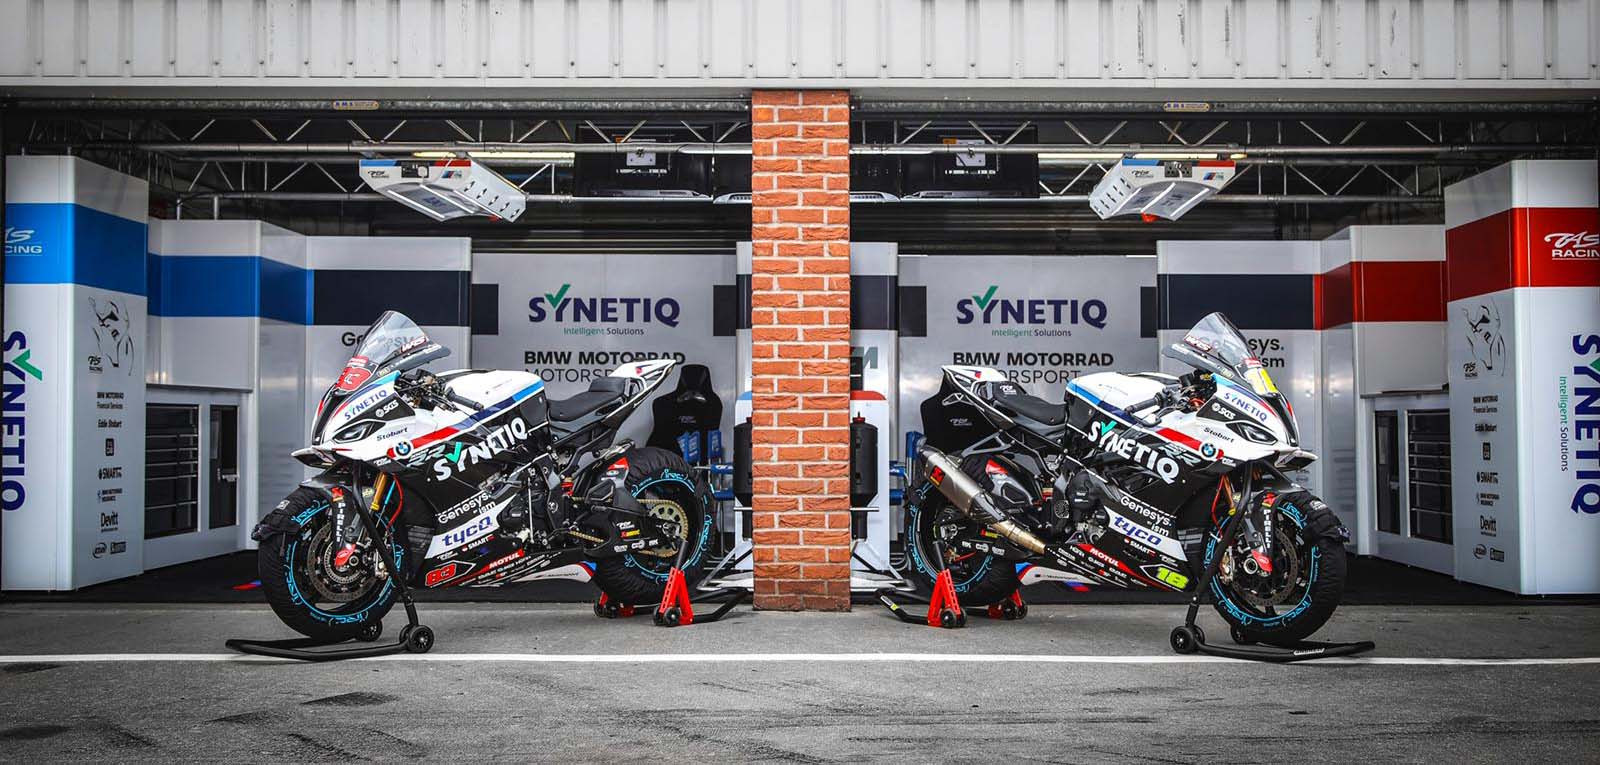 SYNETIQ is returning as TAS Racing's headline sponsor for the 2022 British Superbike Championship. Photo courtesy TAS Racing.